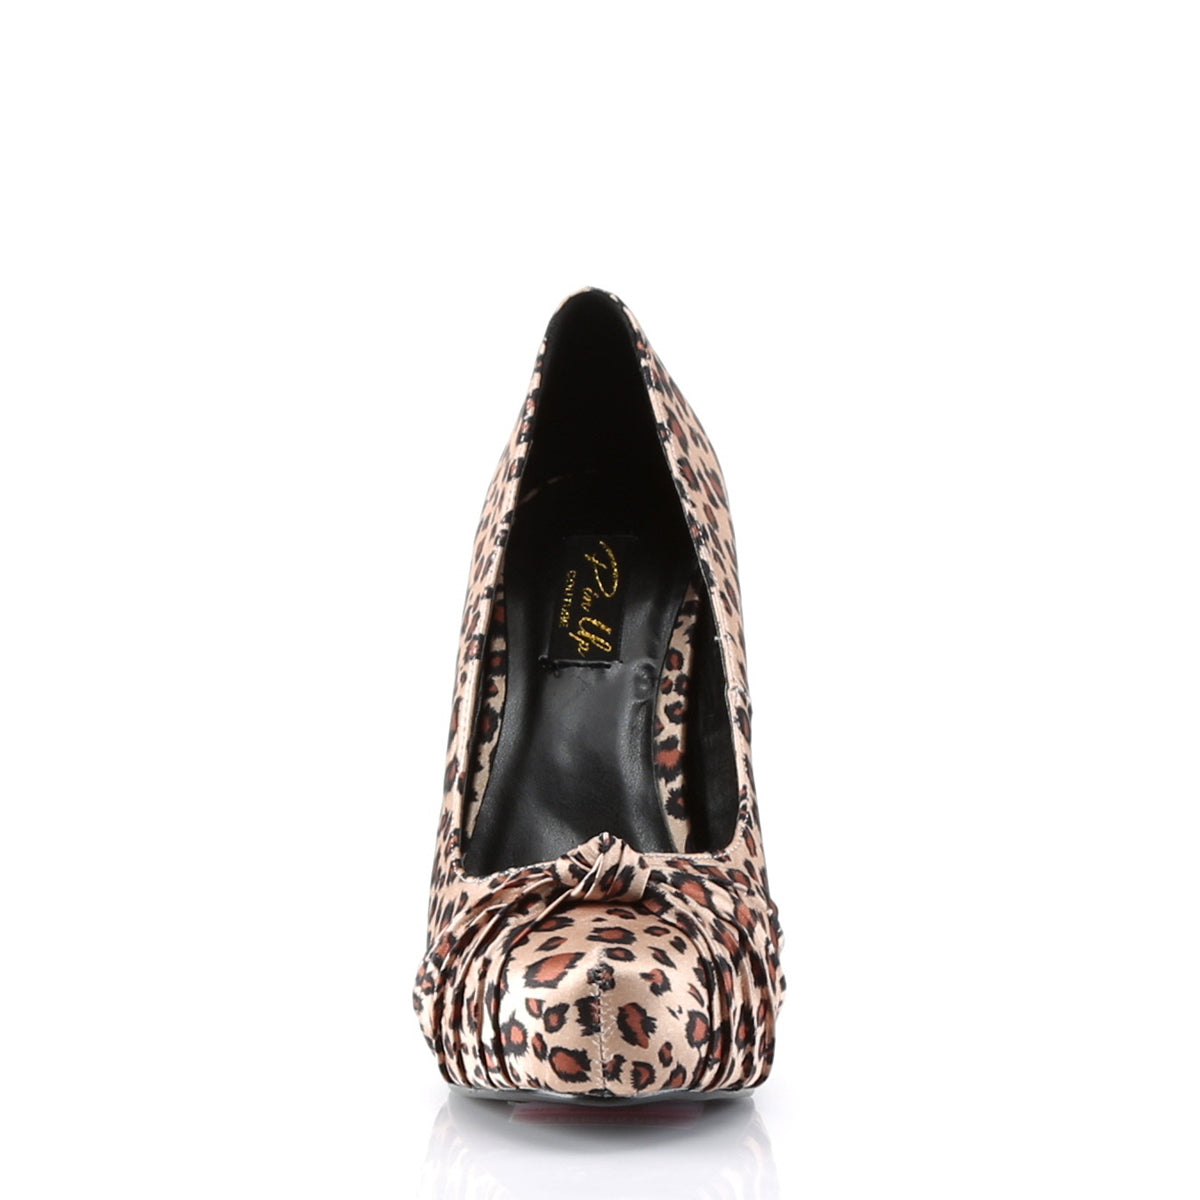 SAFARI-06 Retro Glamour Pin Up Couture Platforms Tan Leopard Print Satin